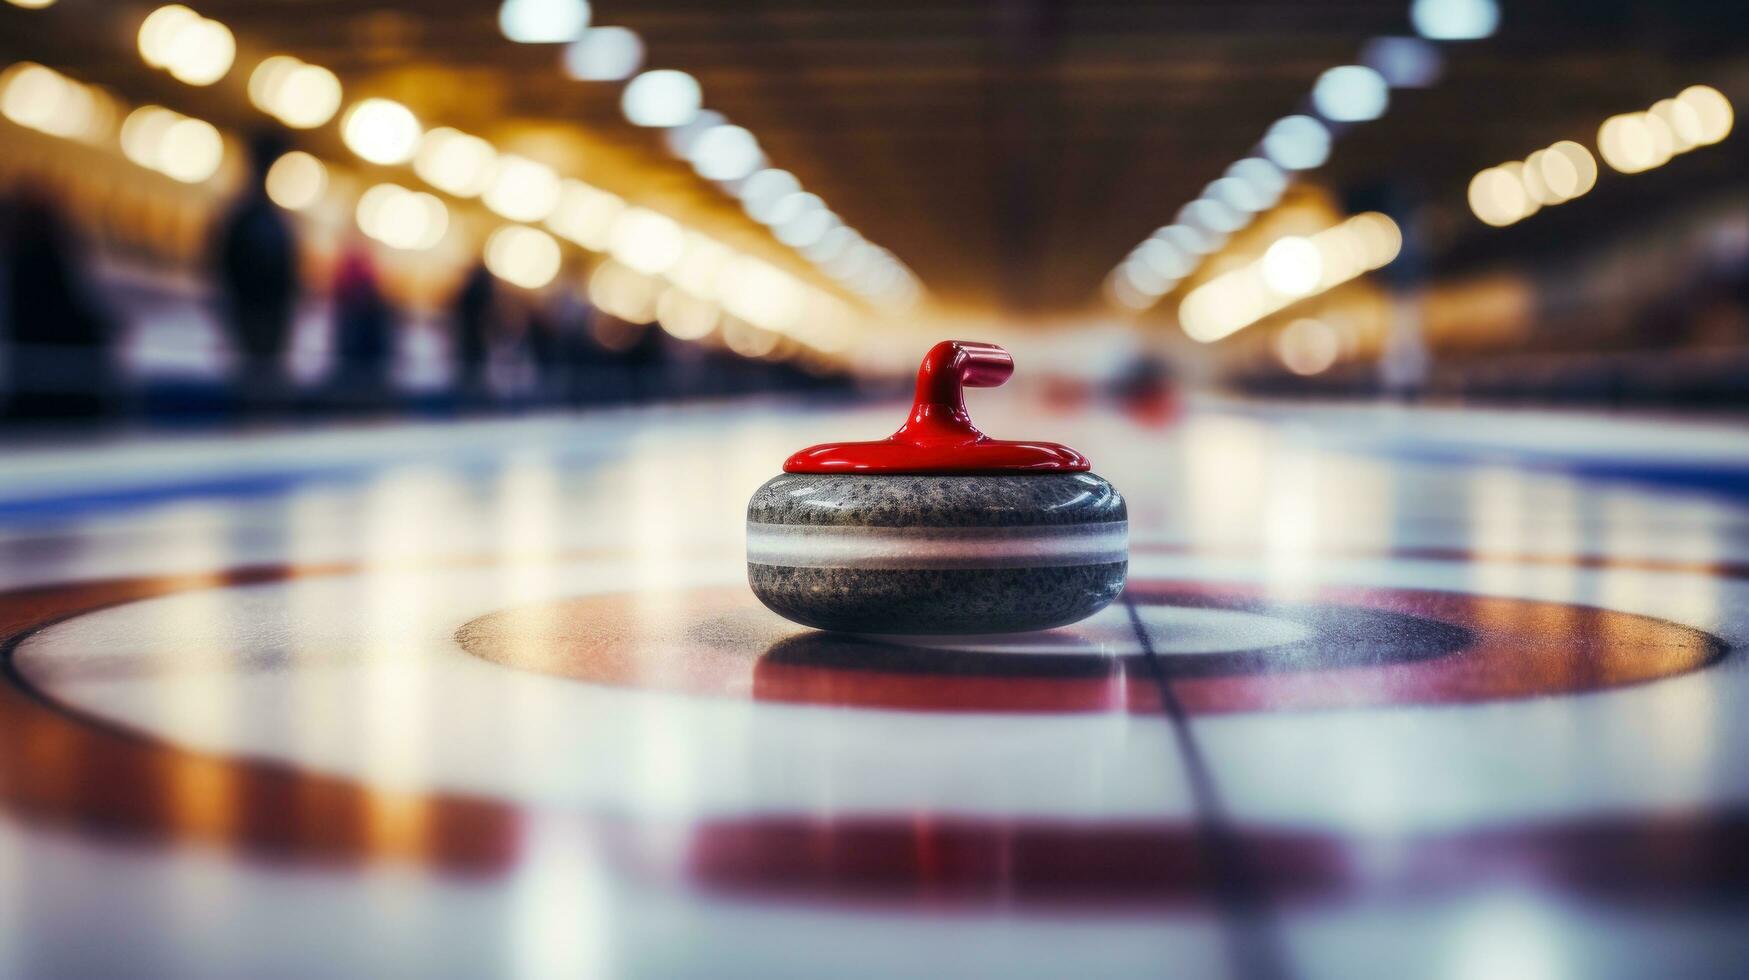 Curling. Strategic gameplay on slick ice photo